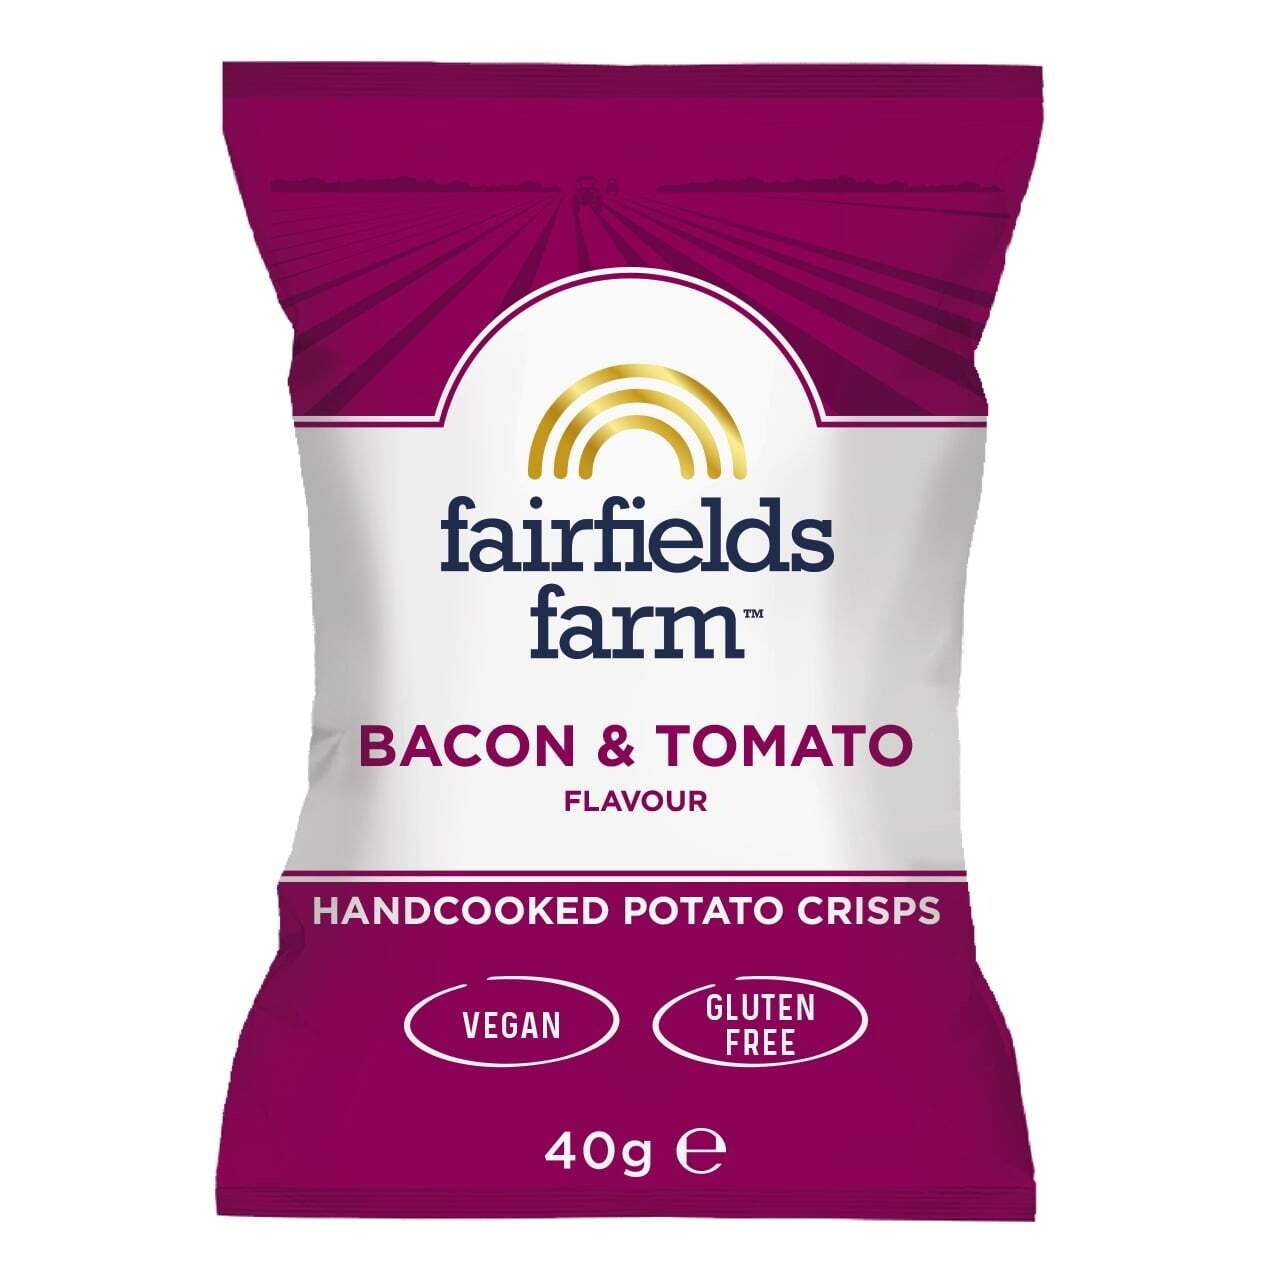 NEW IN! Fairfields Farm- Bacon & Tomato